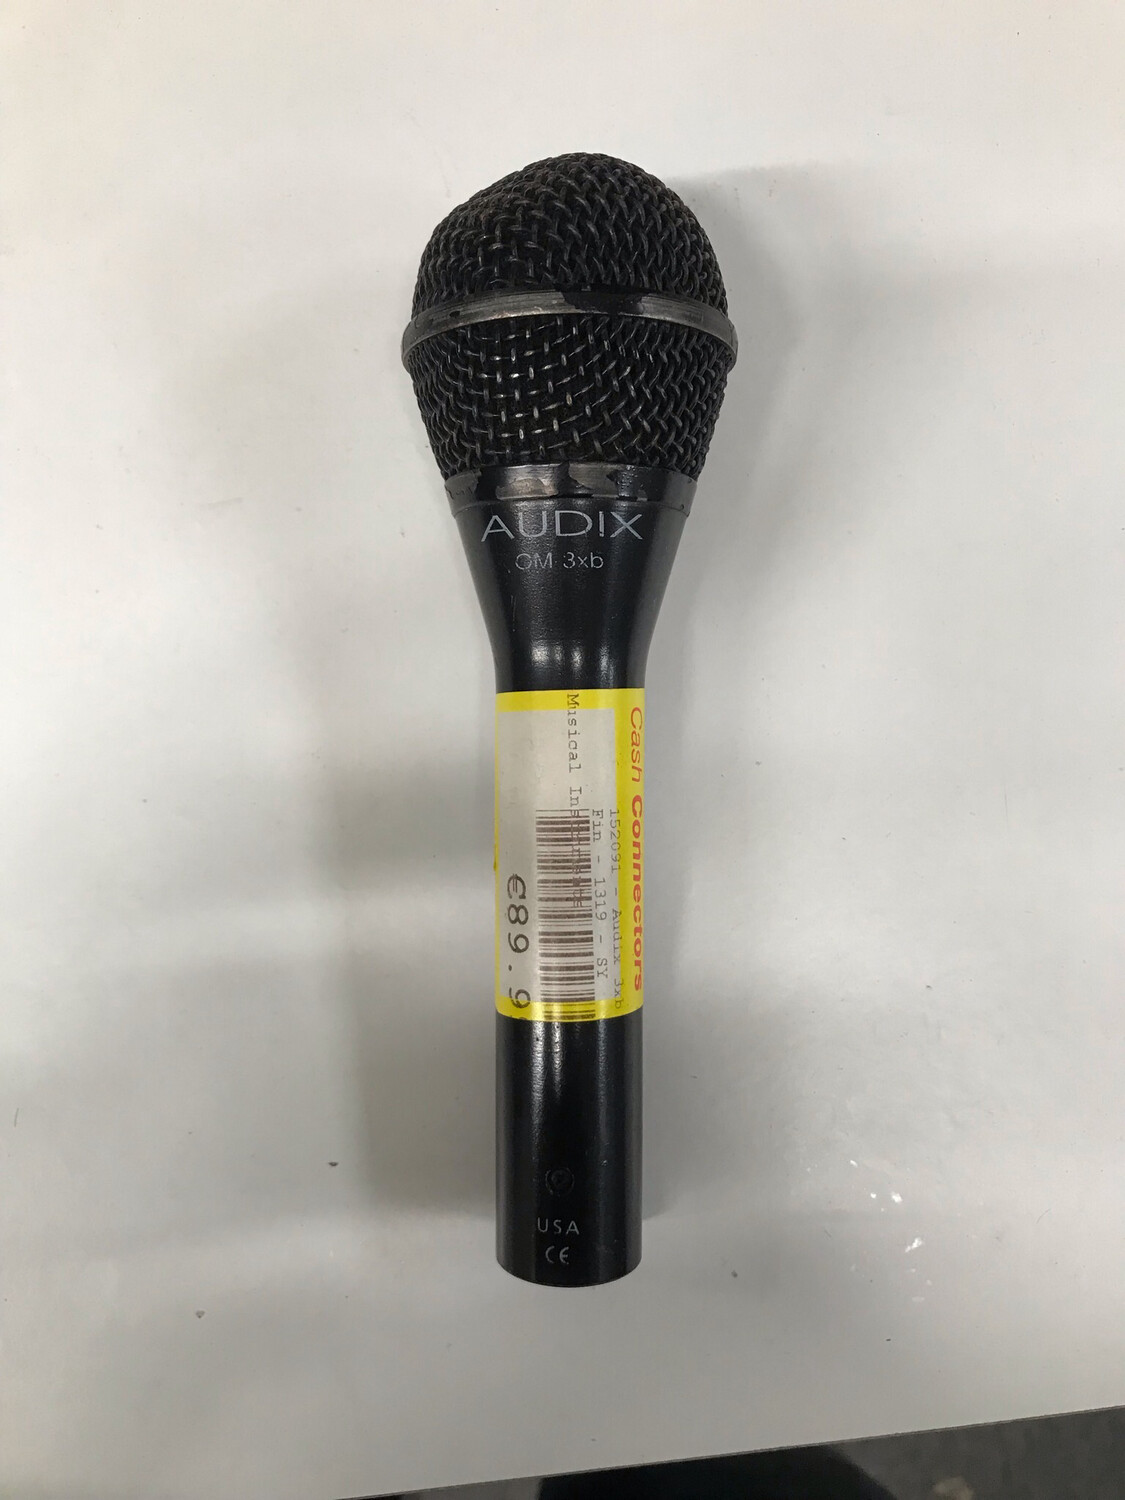 Audix OM 3xb Dynamic Microphone